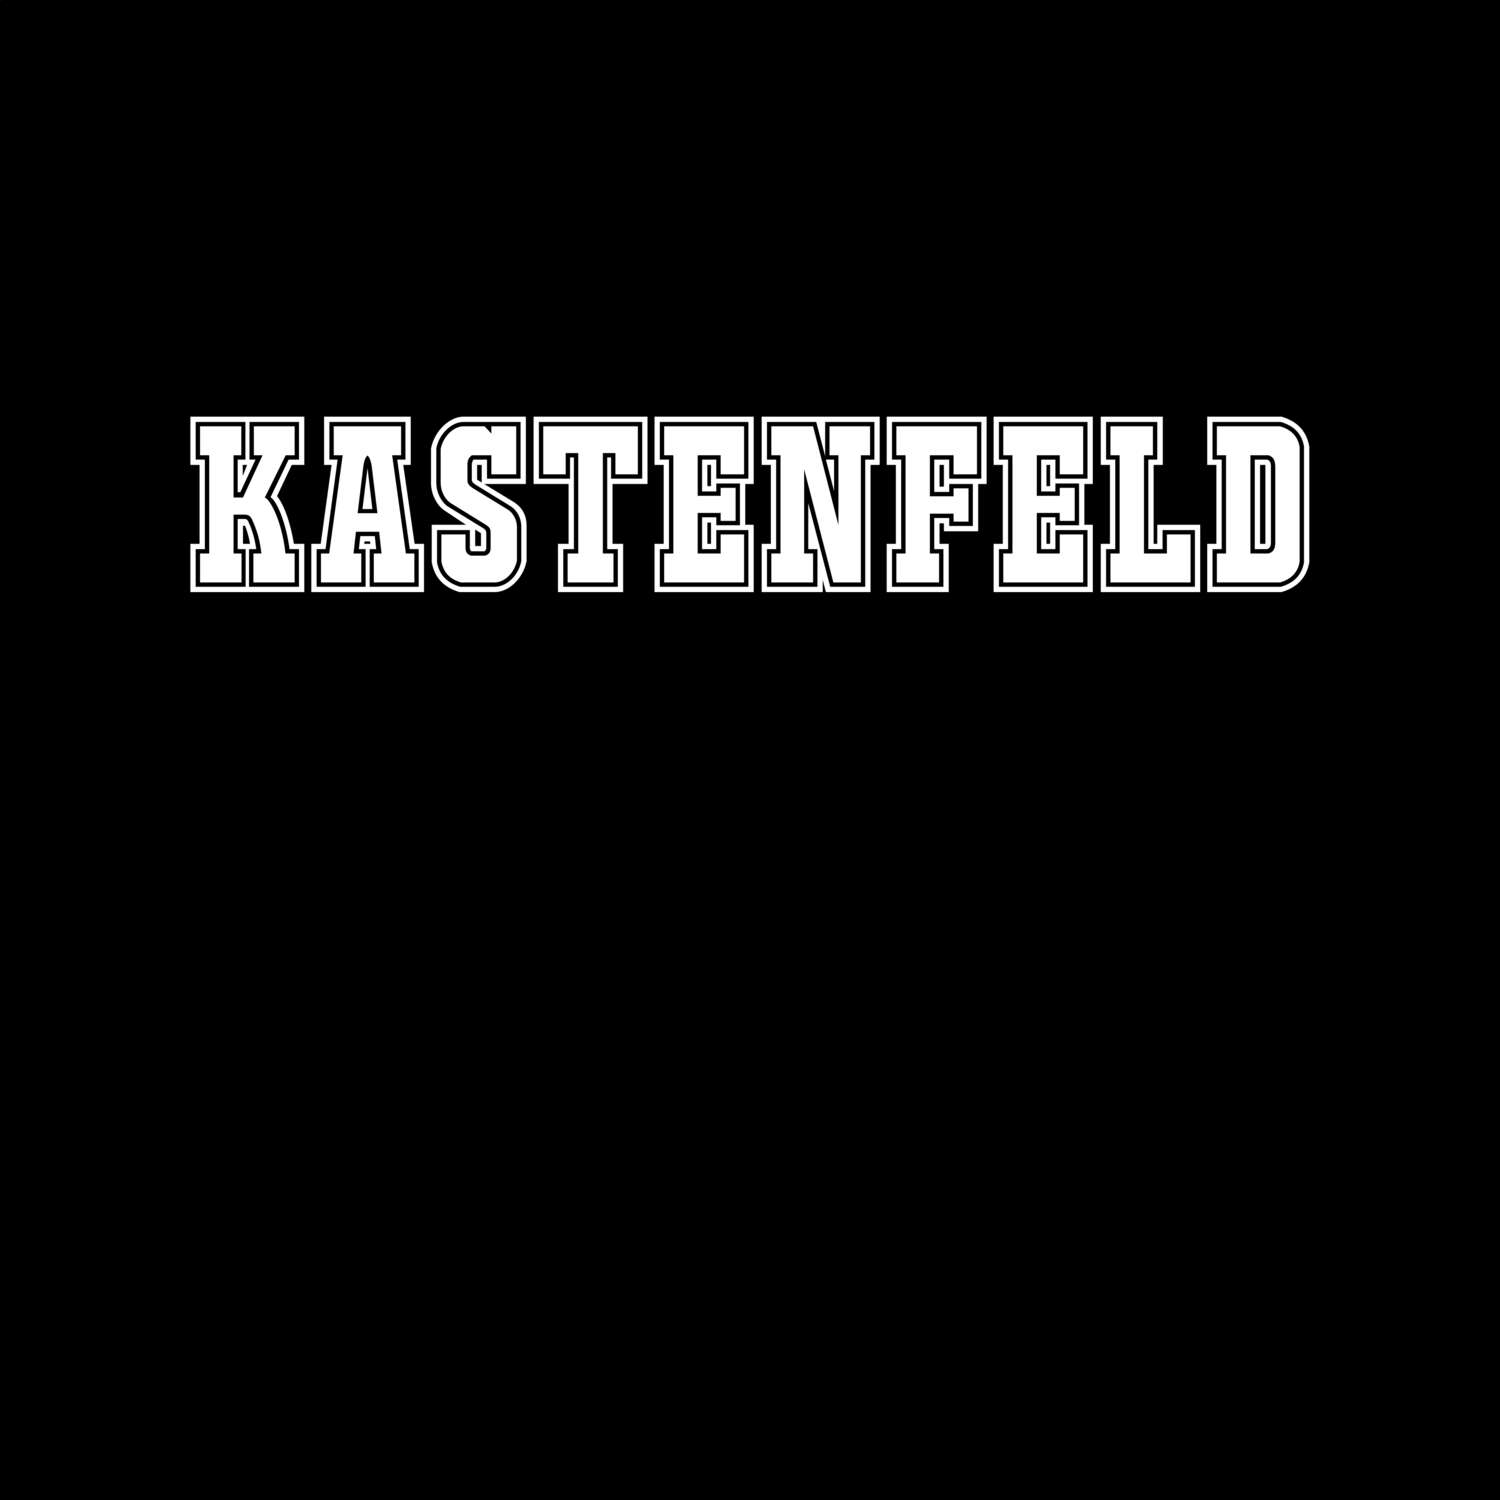 Kastenfeld T-Shirt »Classic«